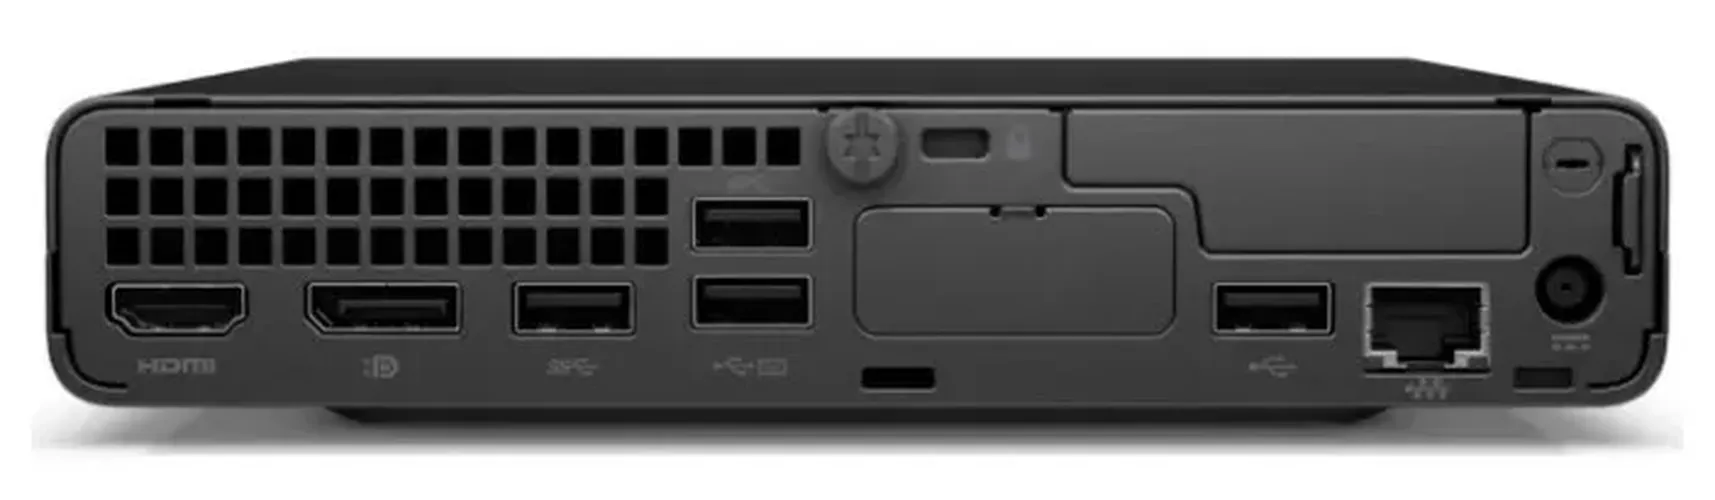 Мини ПК HP  PRODESK 400 G6 |G6400| 4Gb DDR4| SSD 128Gb, Черный, фото